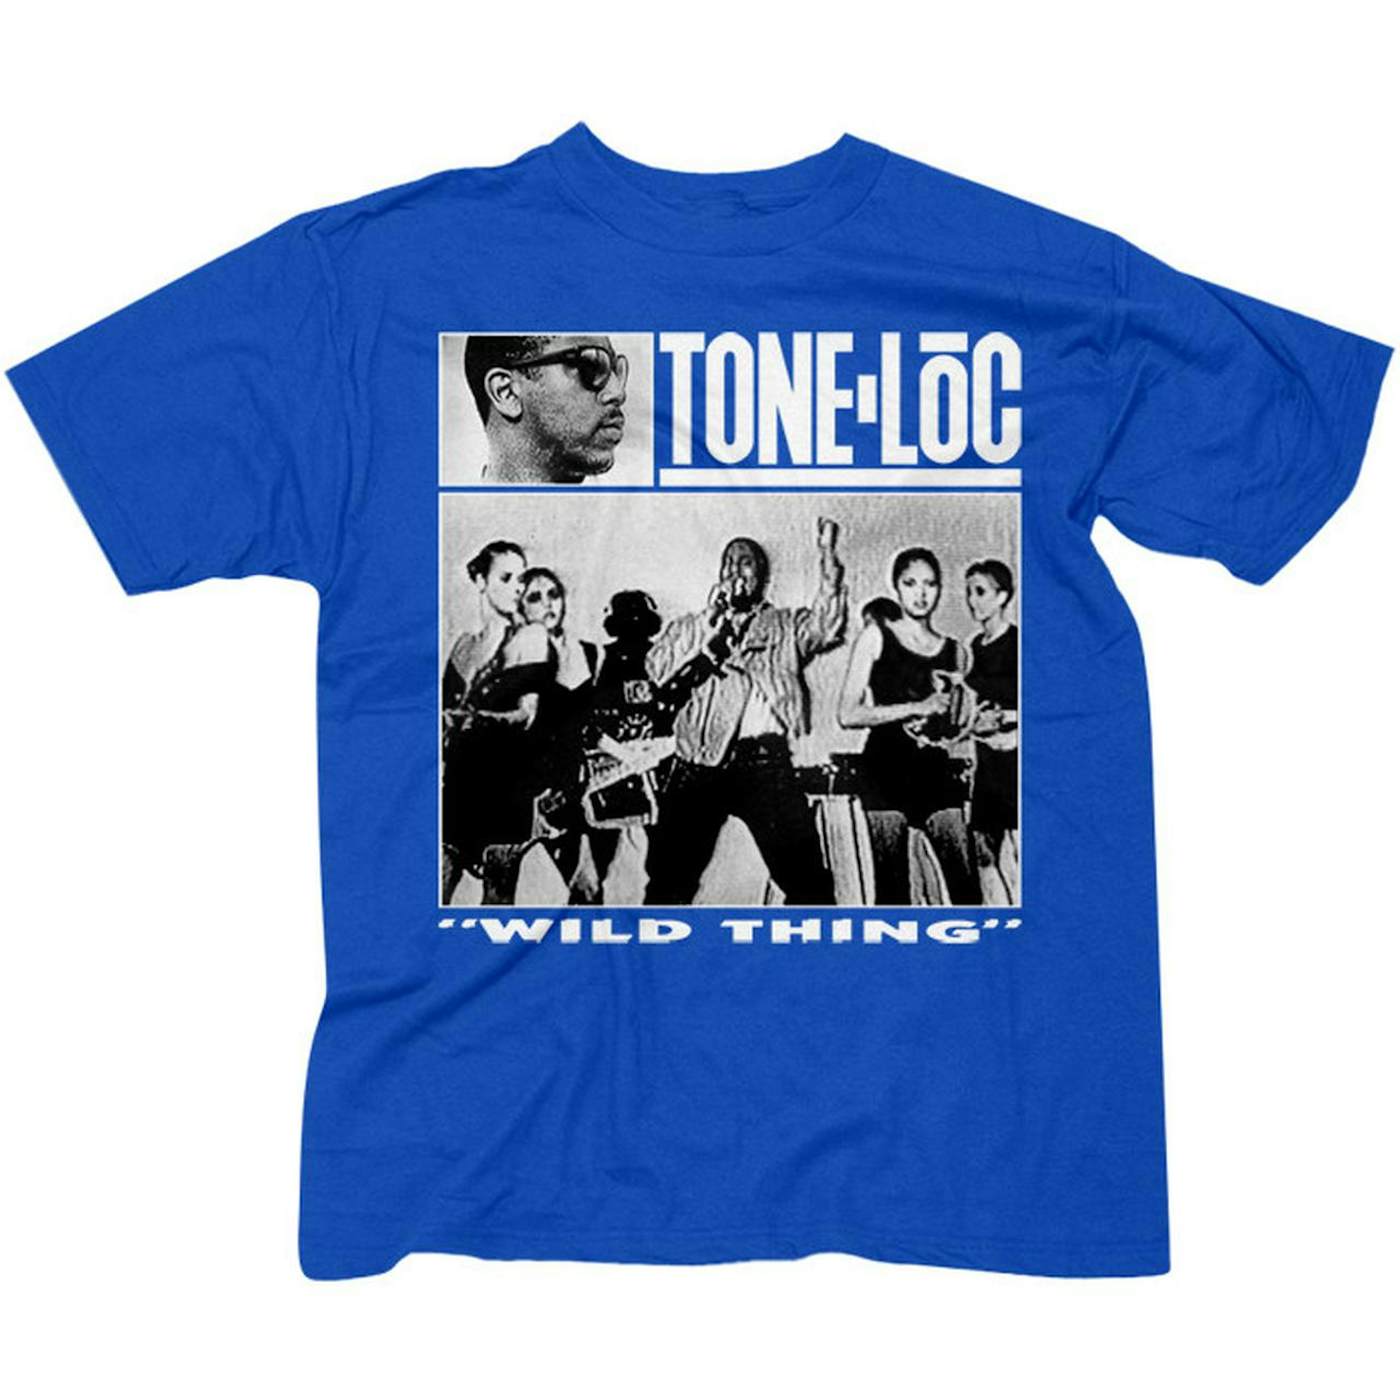 Tone-Loc "Wild Thing" Men's Royal Blue T-shirt